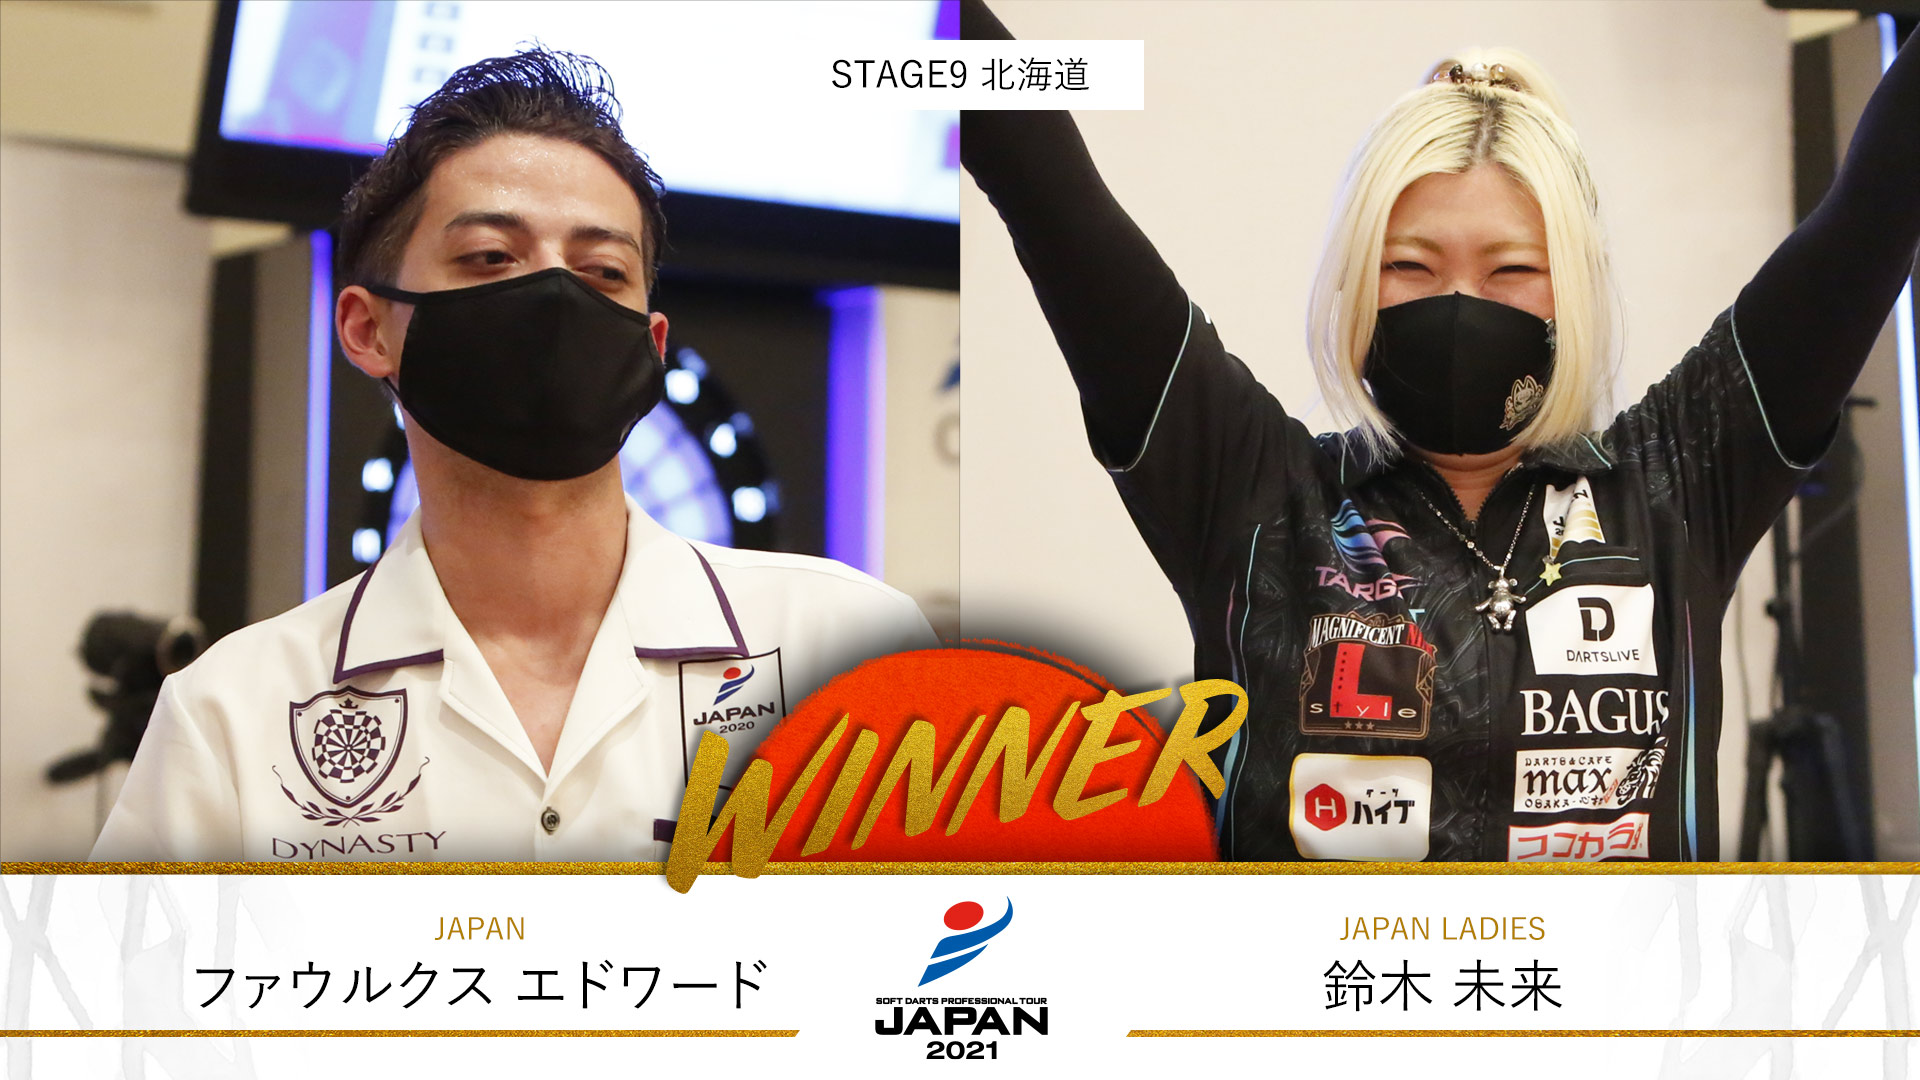 JAPAN2021 STAGE9 北海道 Winner